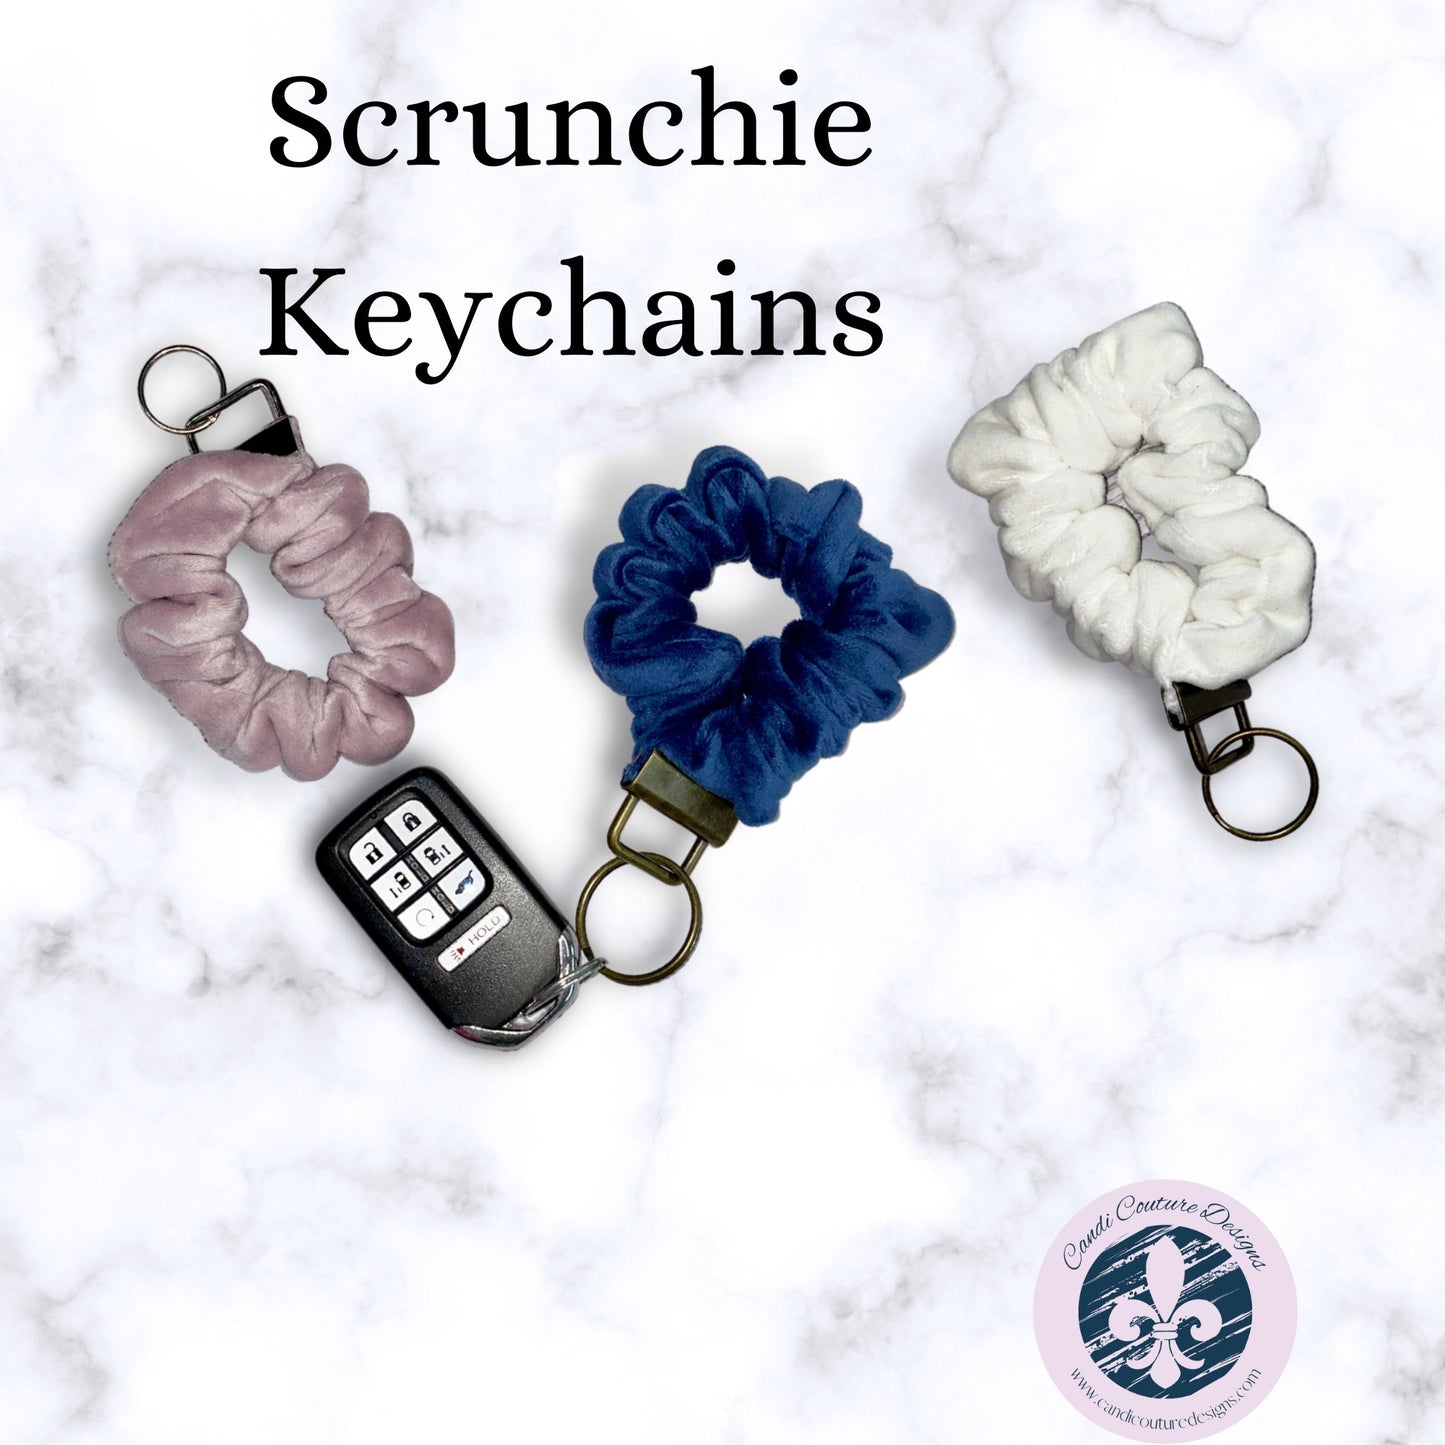 Personalized Plush Velour Scrunchie Keychain: Customizable Trendy Key Holder – Stylish Velvet Key Accessory - Candicouturedesigns